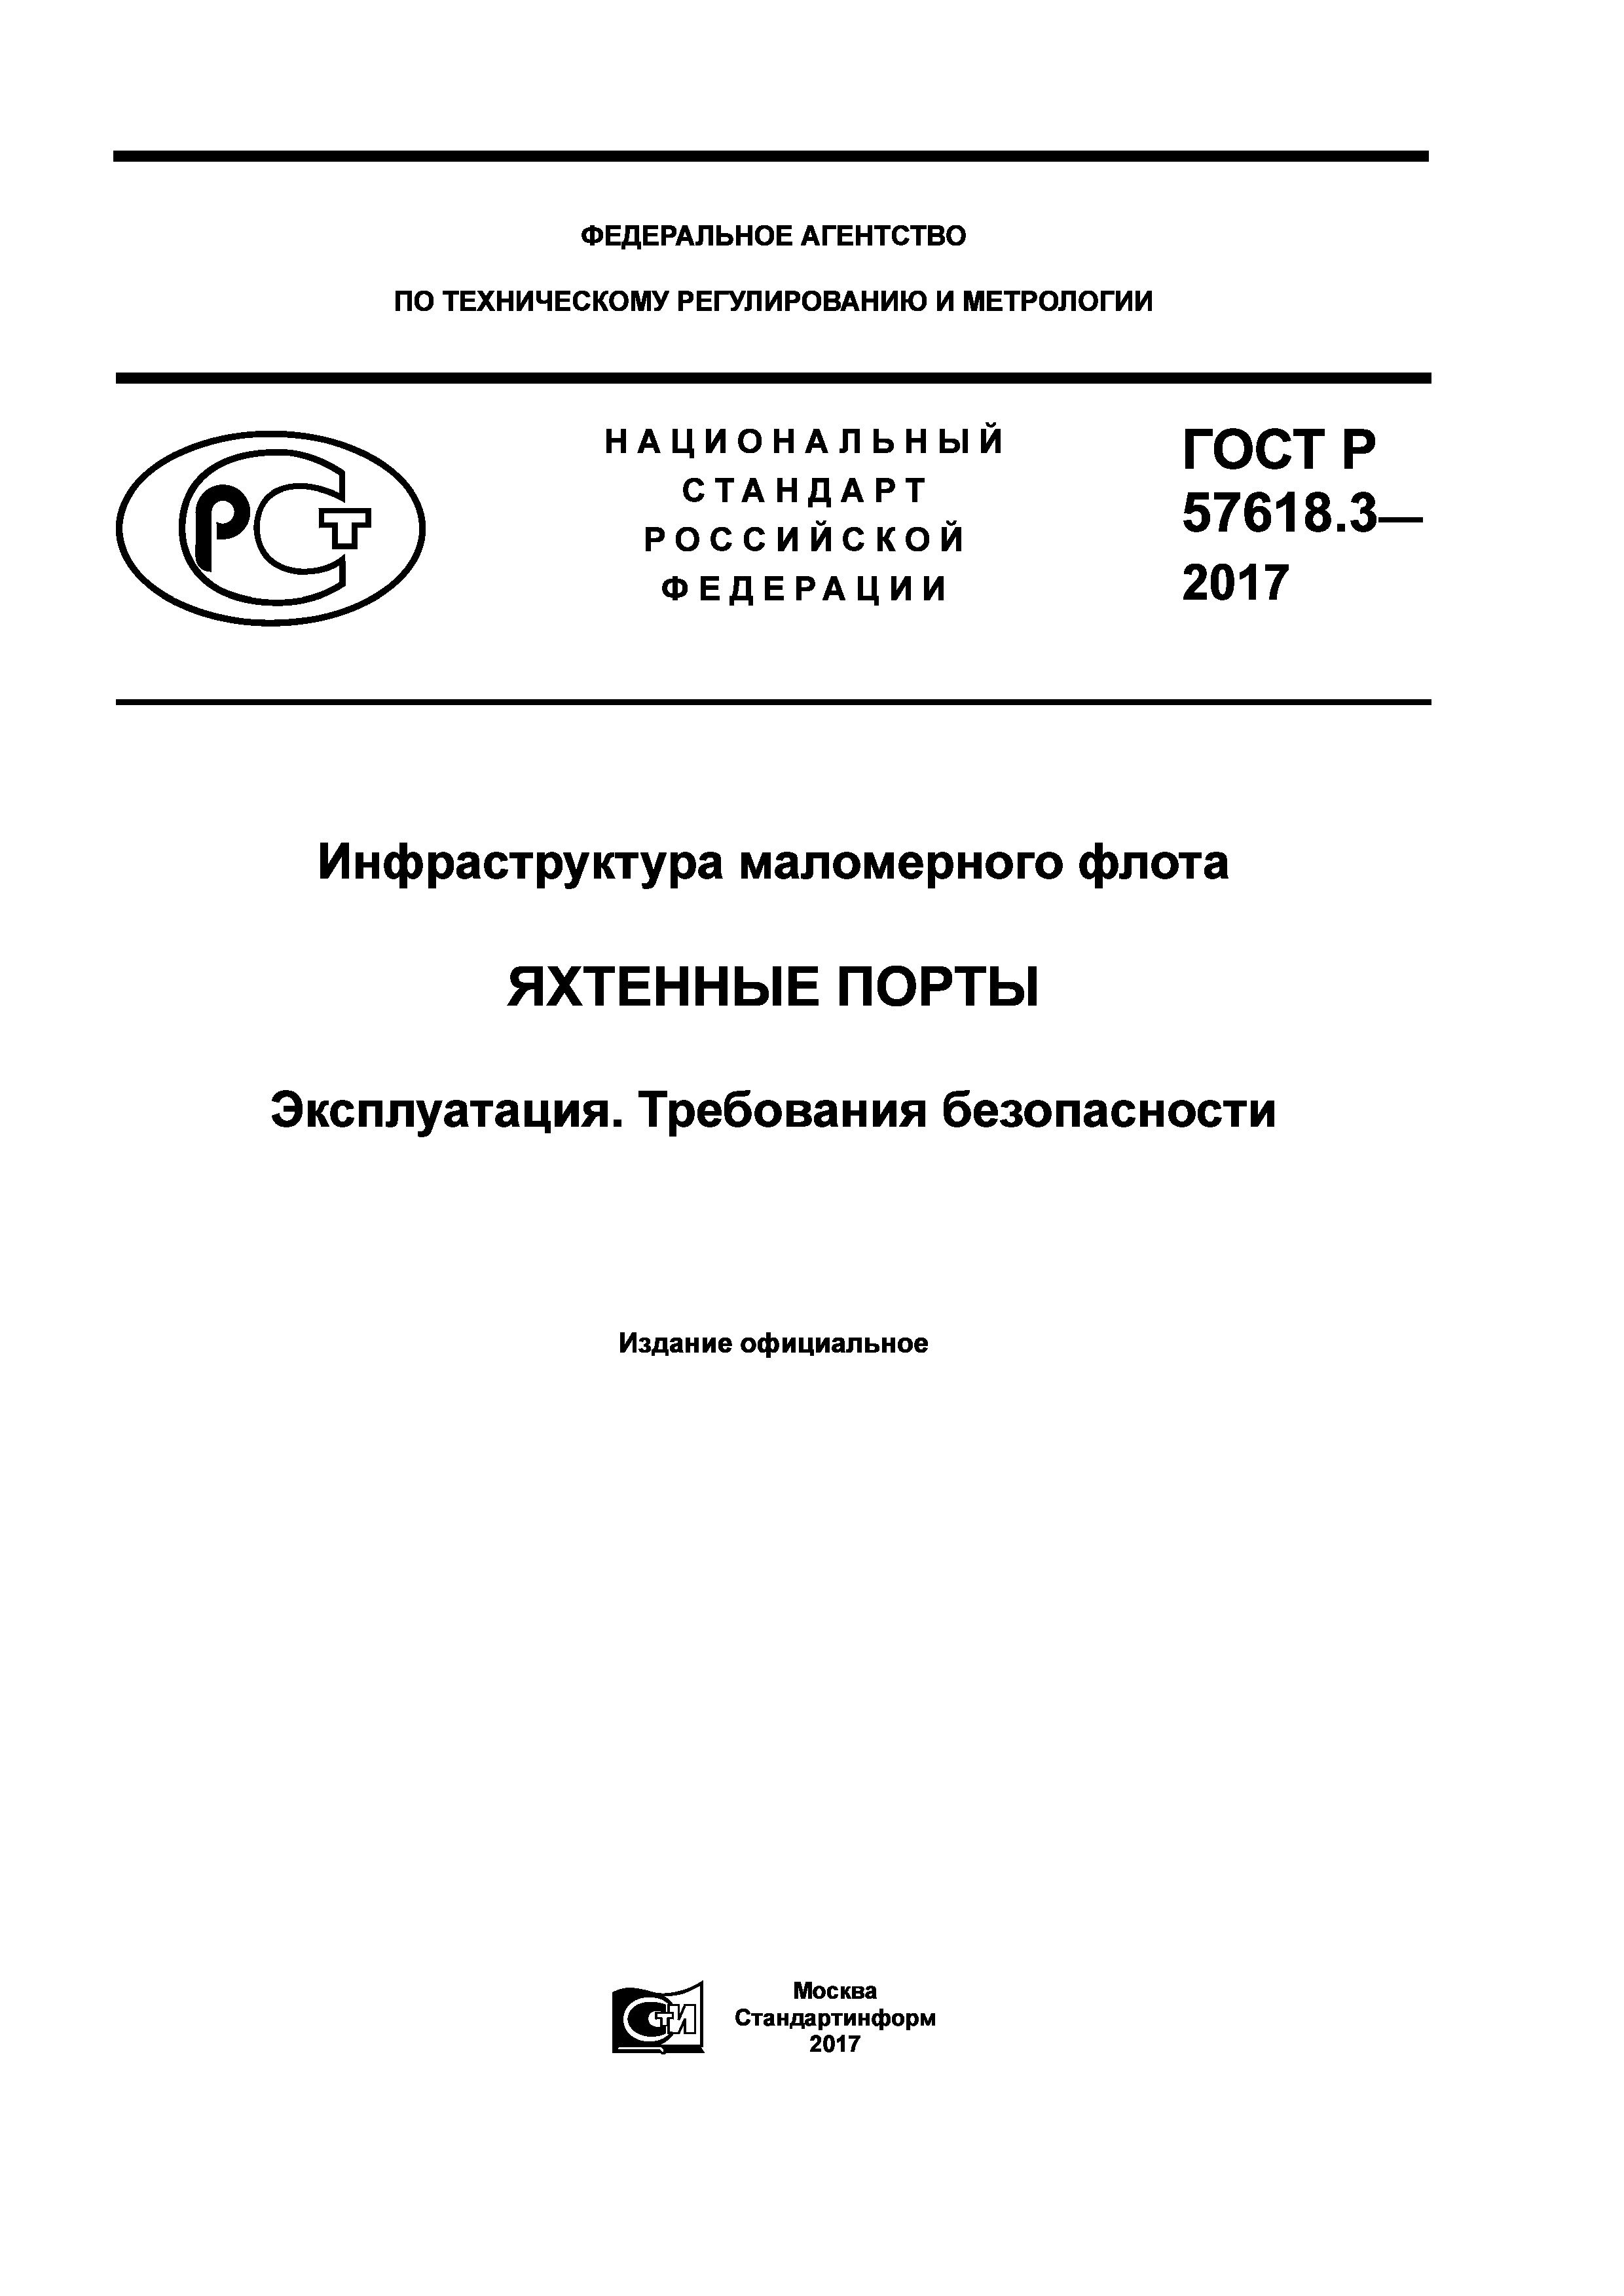 ГОСТ Р 57618.3-2017